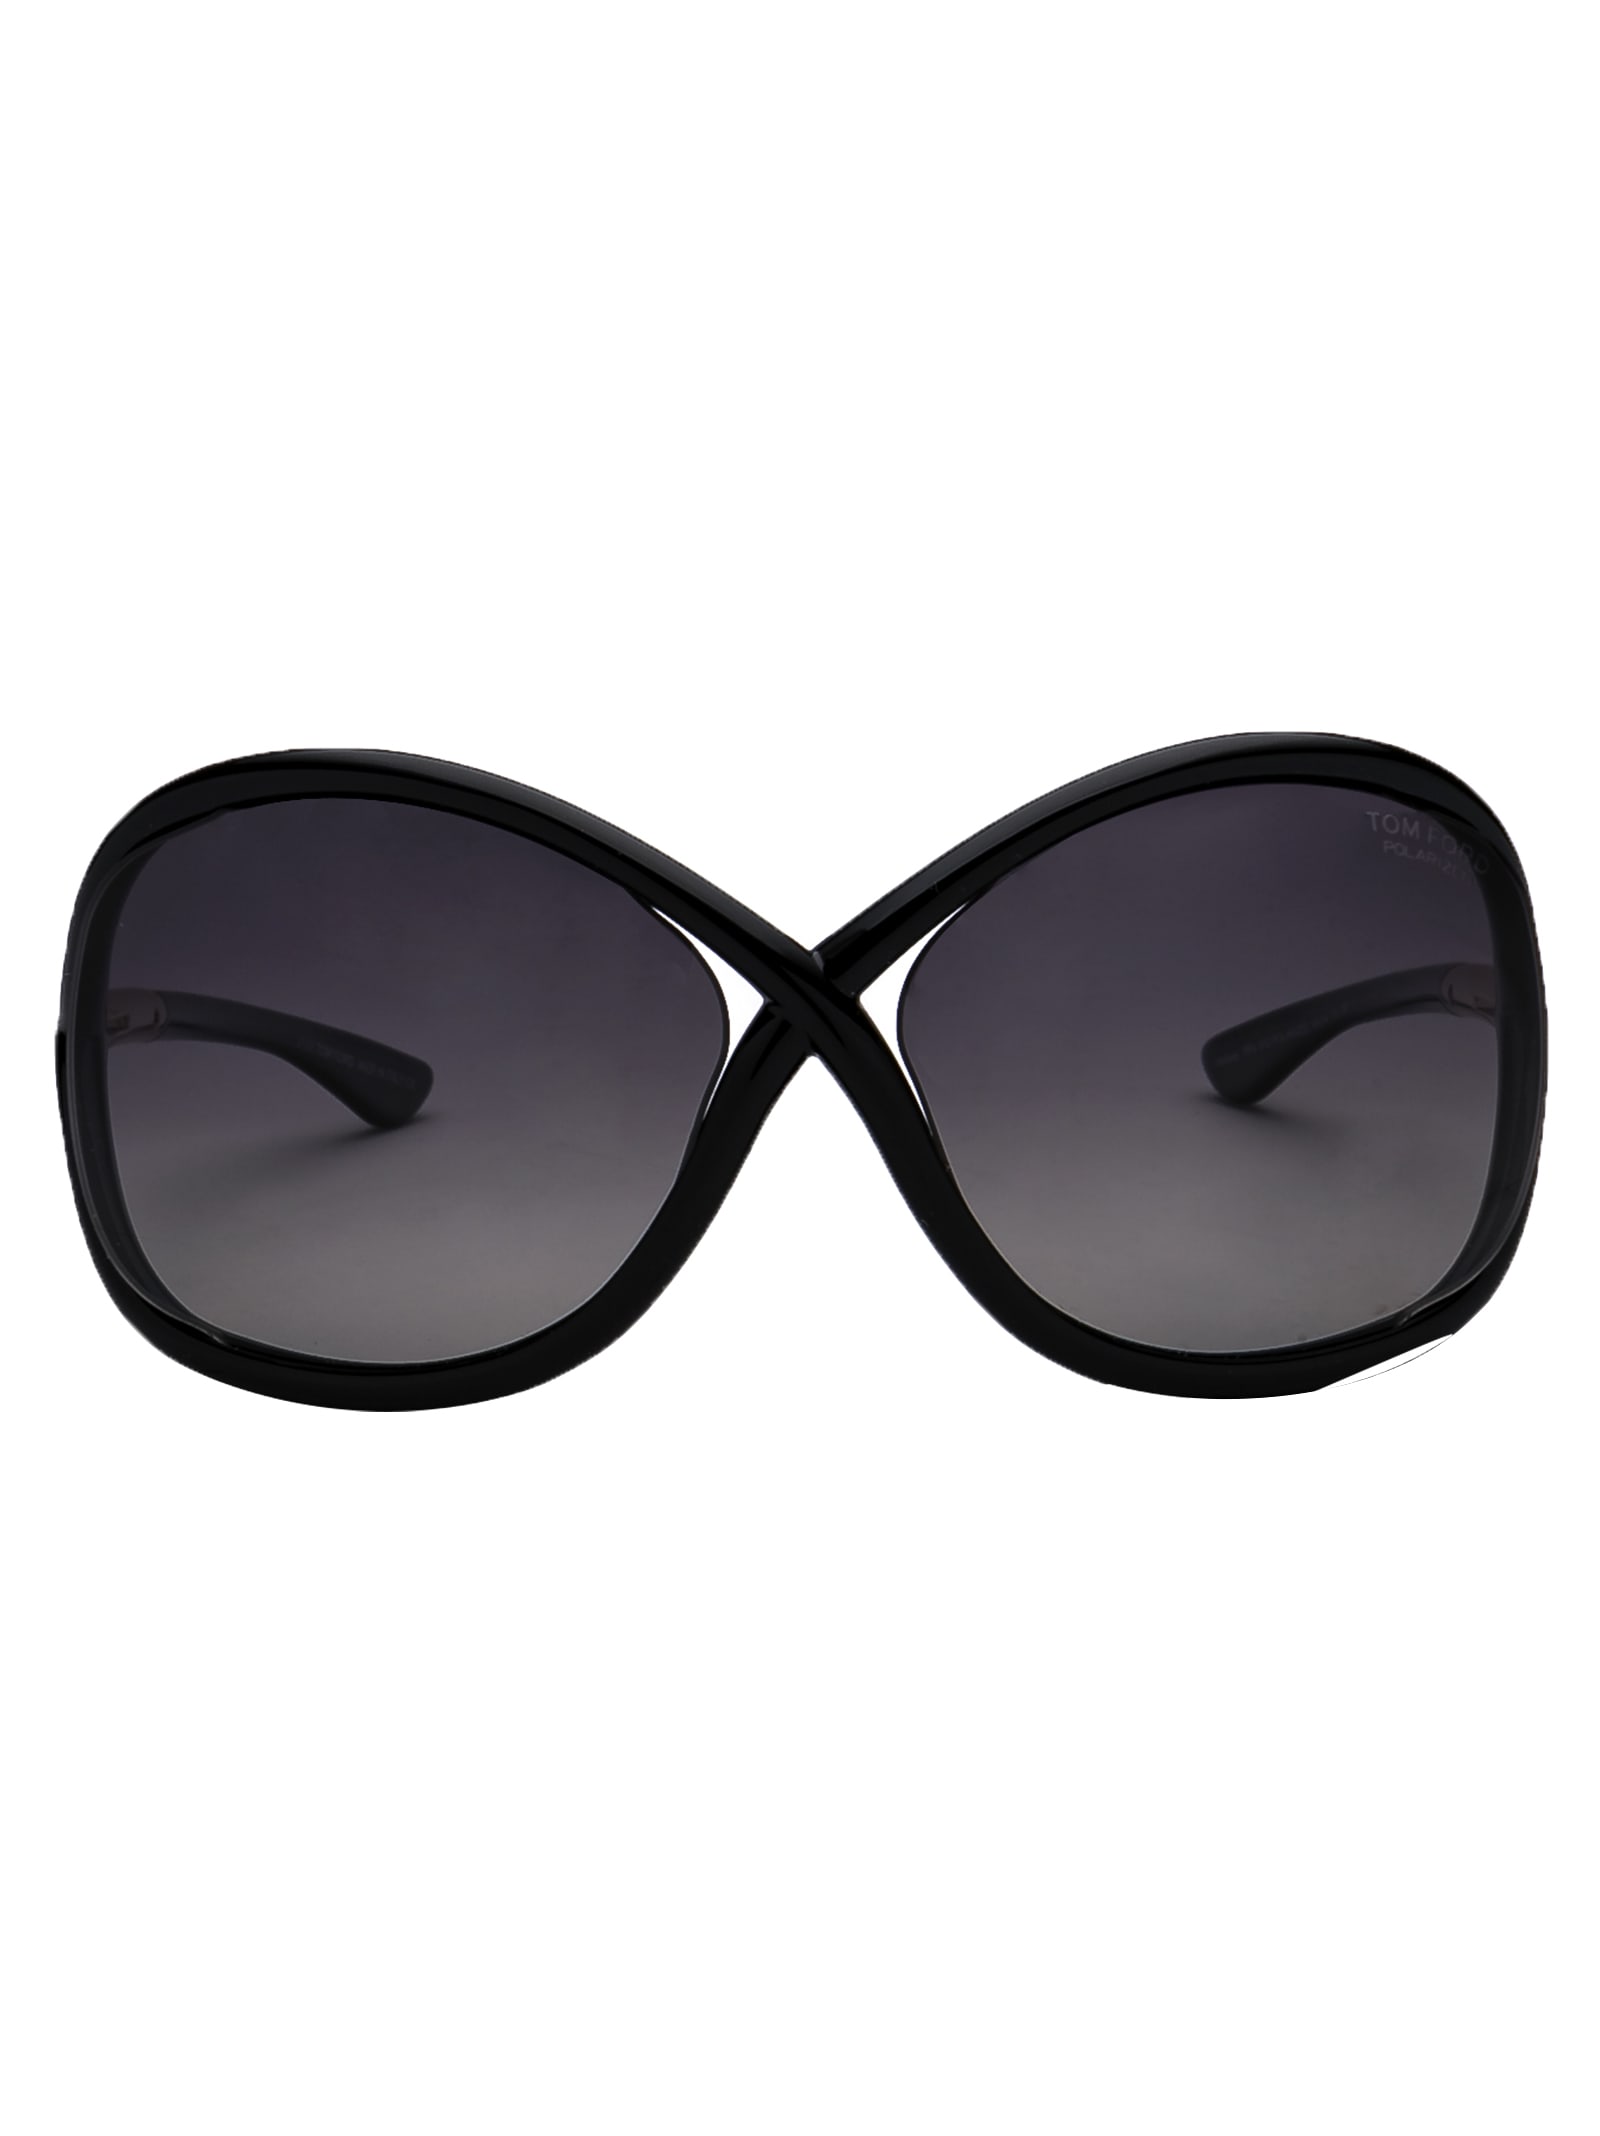 Tom Ford Whitney Sunglasses In 01d Nero Lucido / Fumo Polar